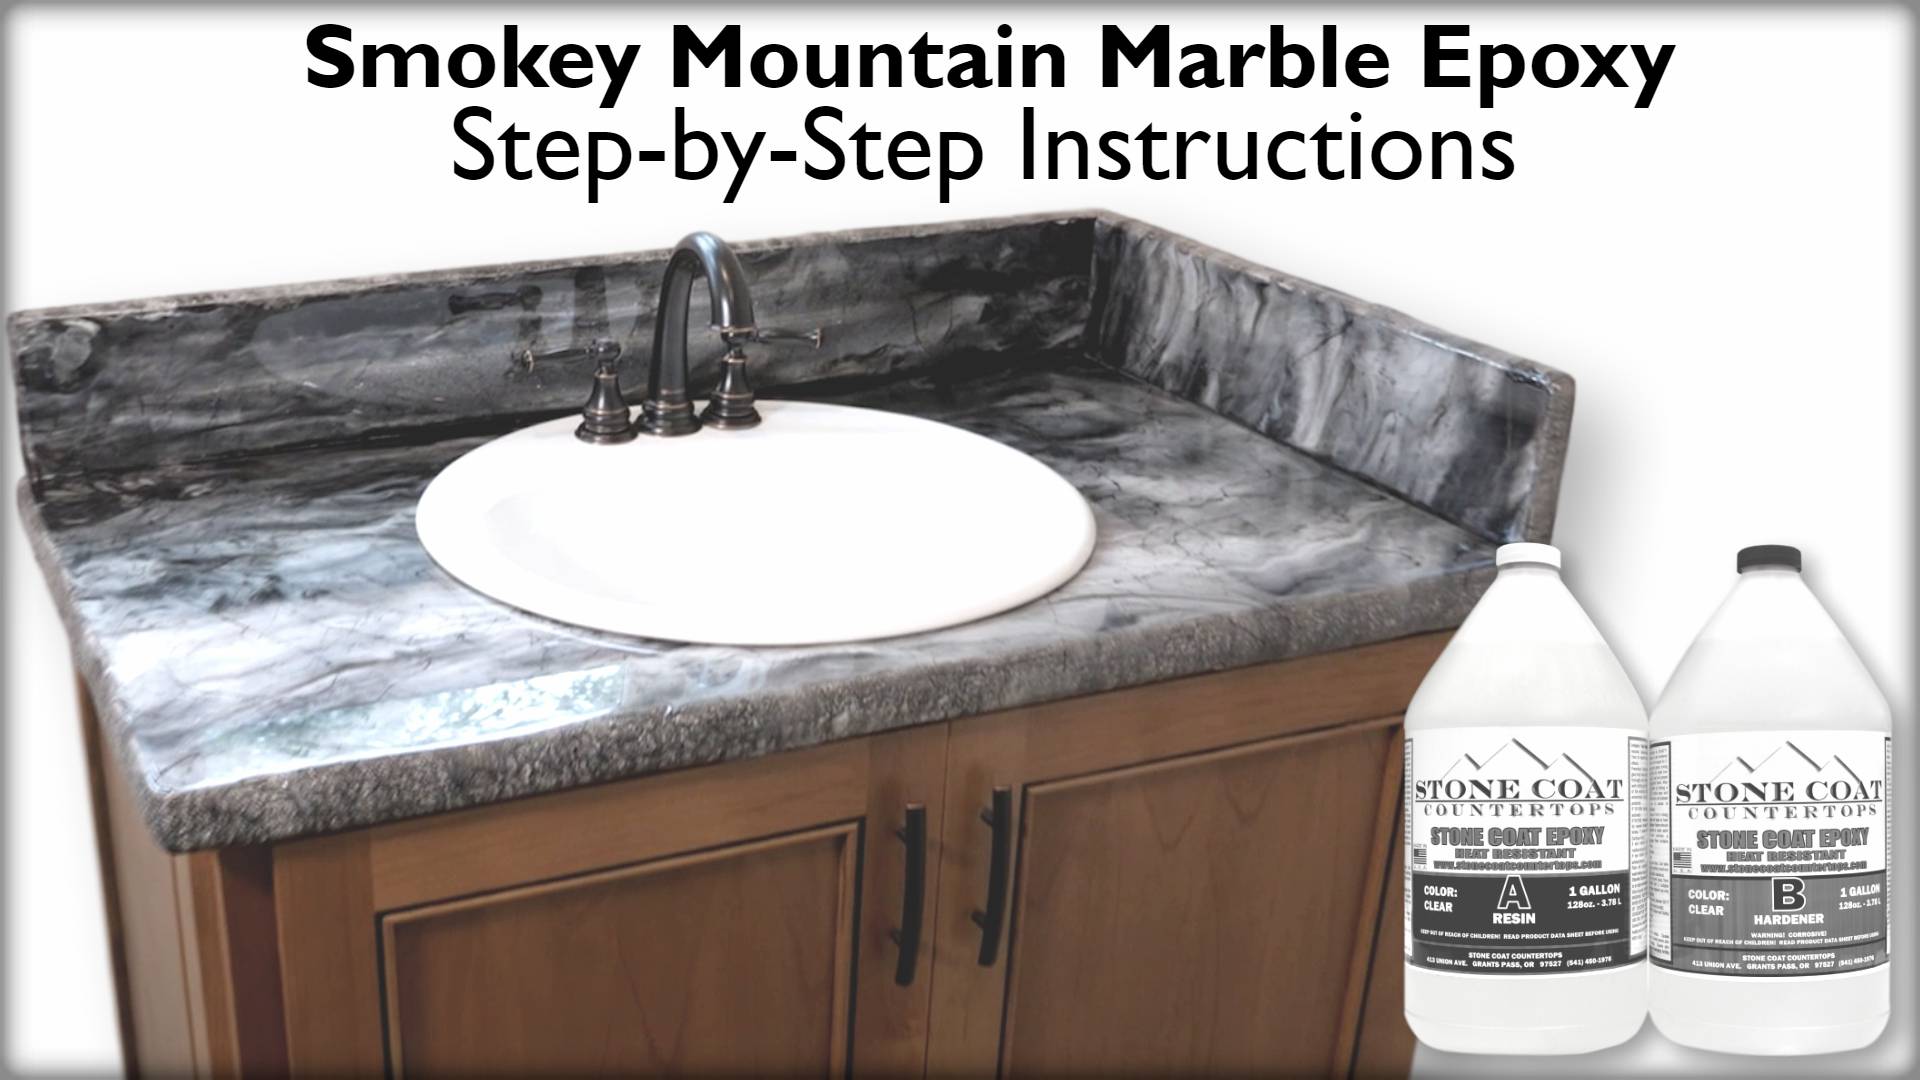 Smokey Mountain Marble Epoxy Step-by-Step Instructions